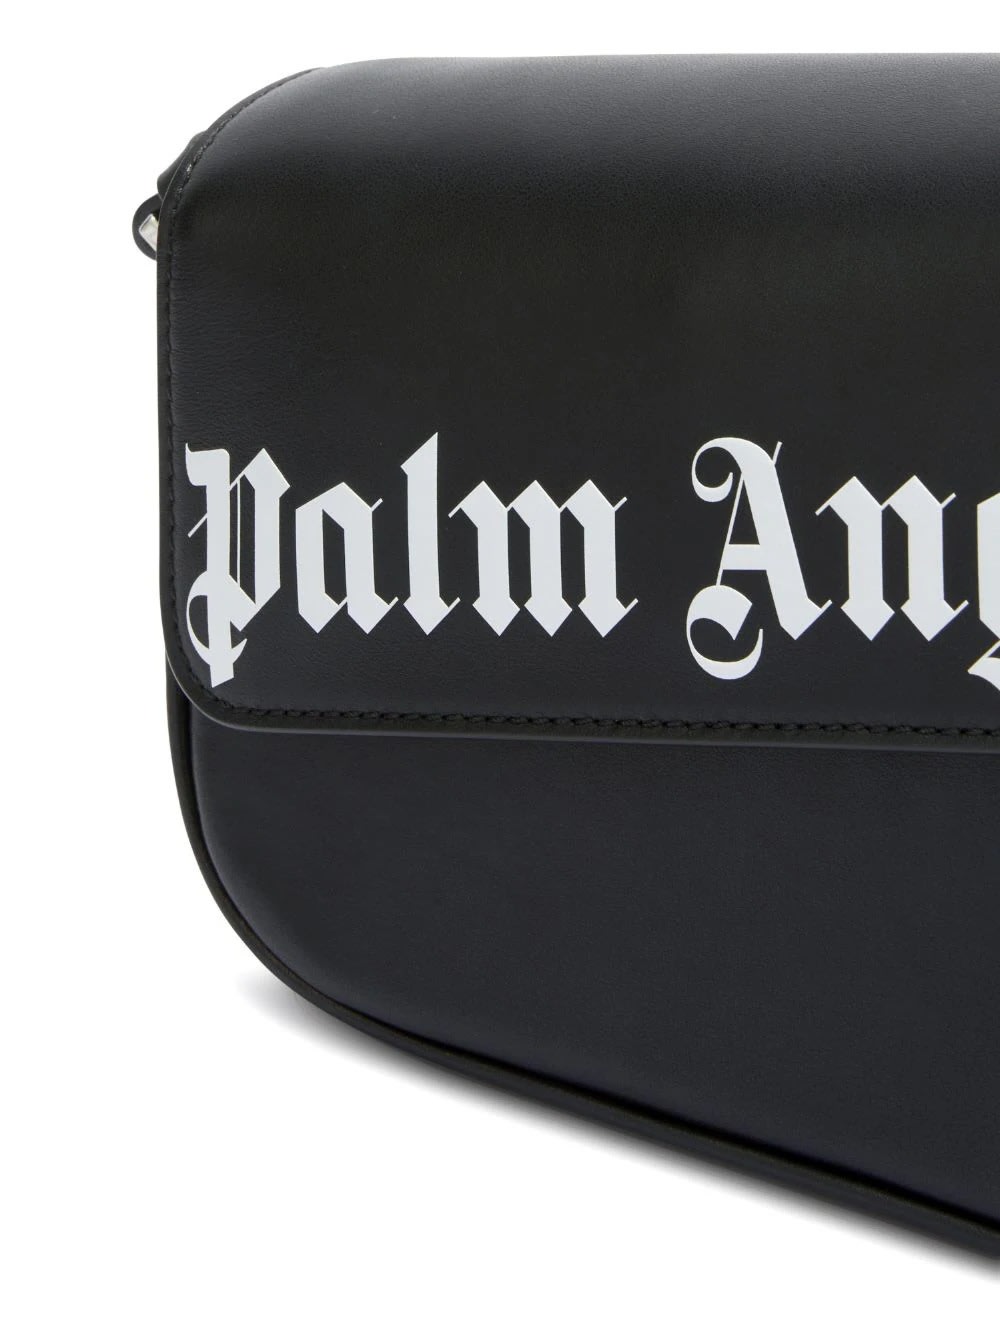 Shop Palm Angels Black Crush Bag